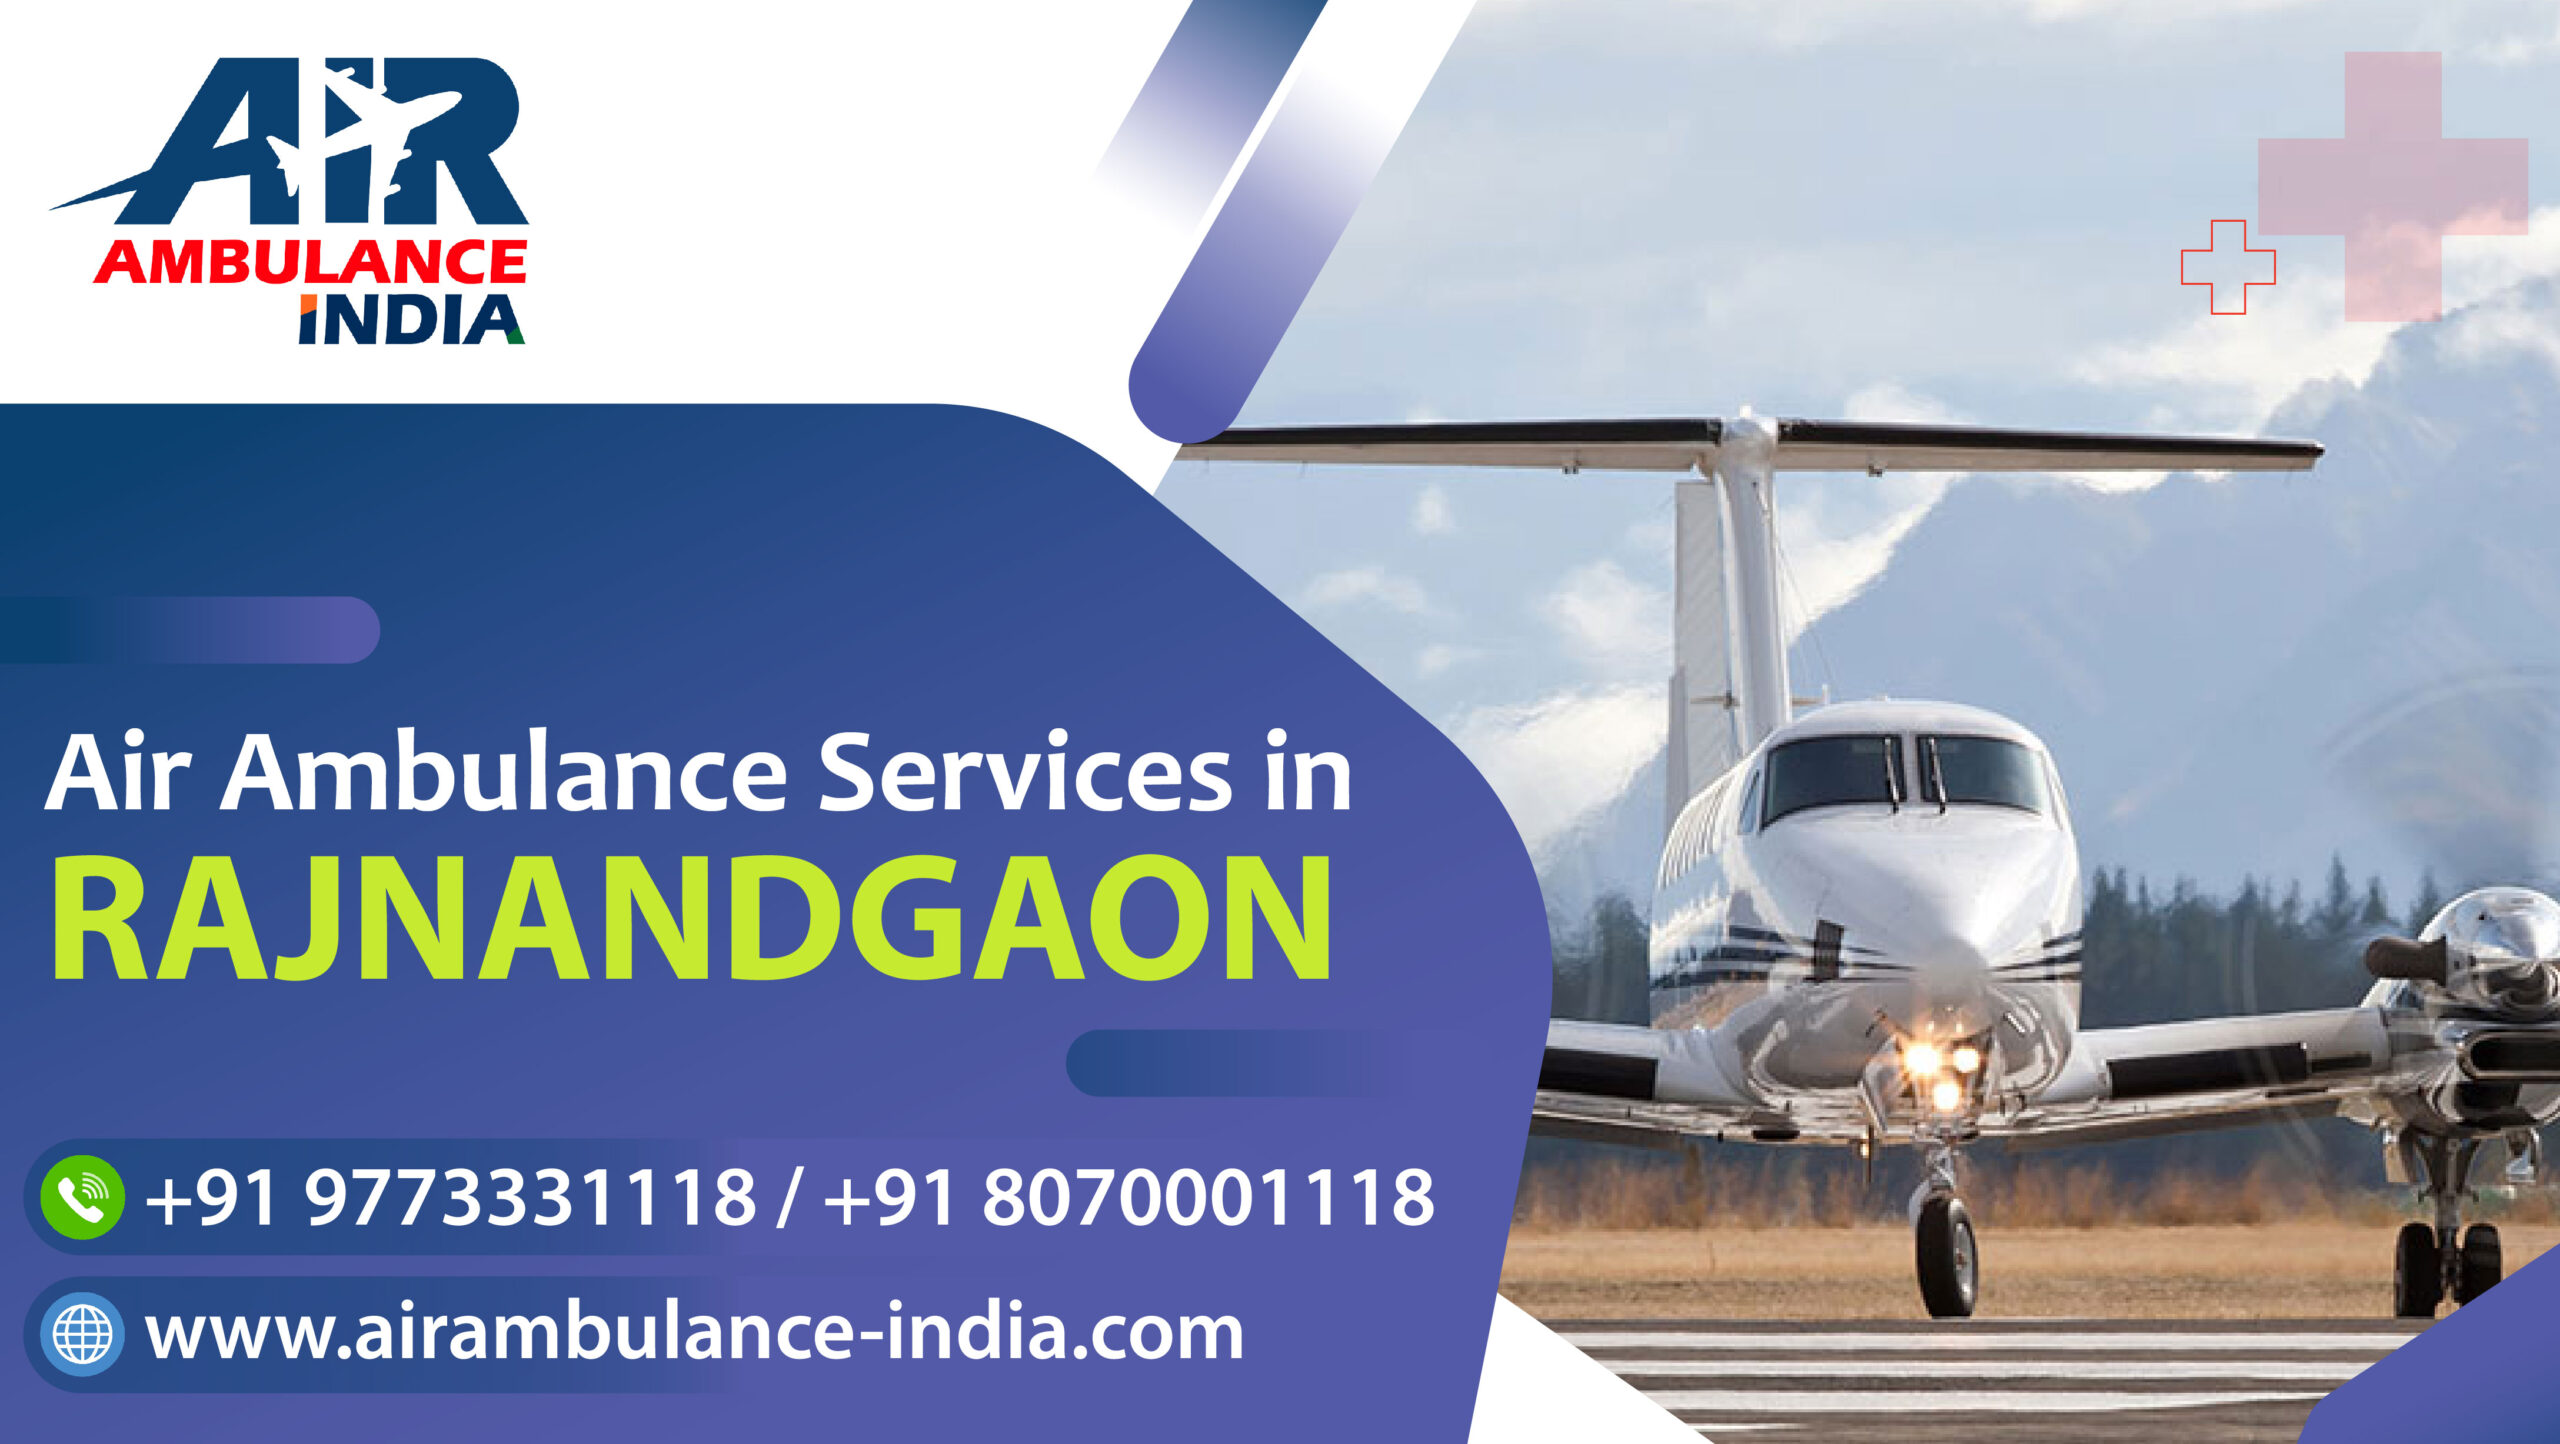 Air Ambulance Services in Rajnandgaon